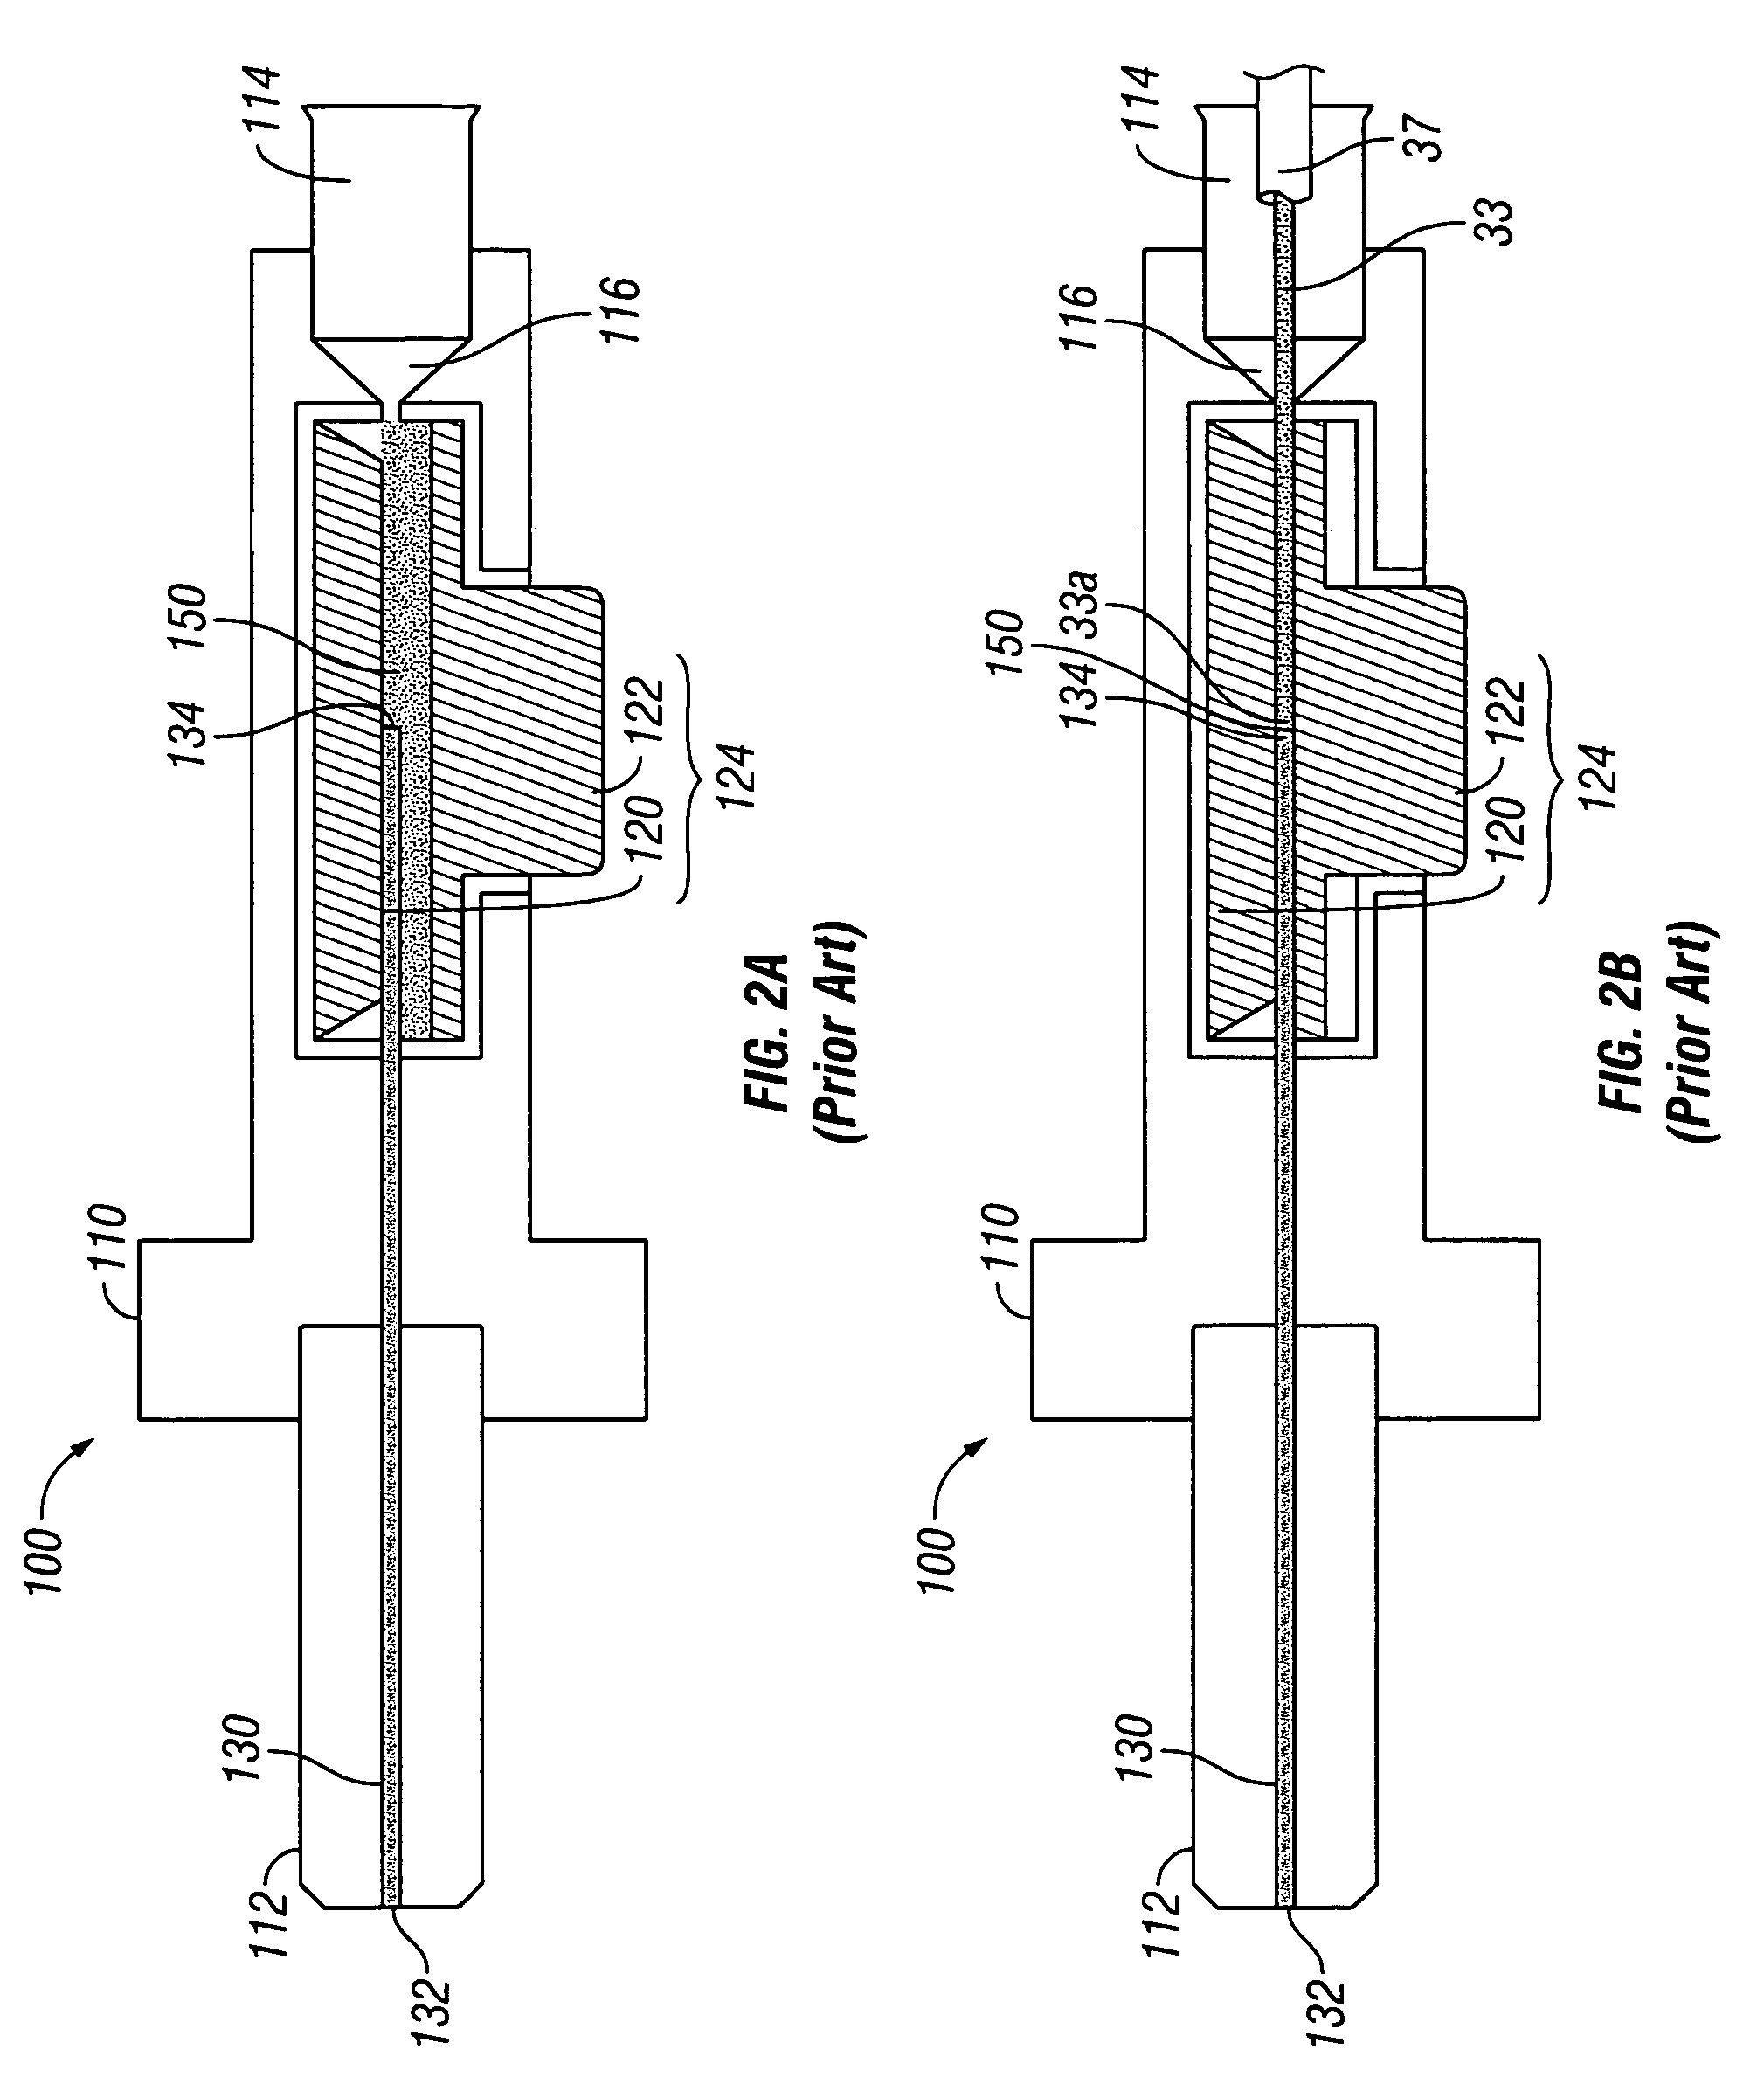 Optical fiber mechanical splice connector